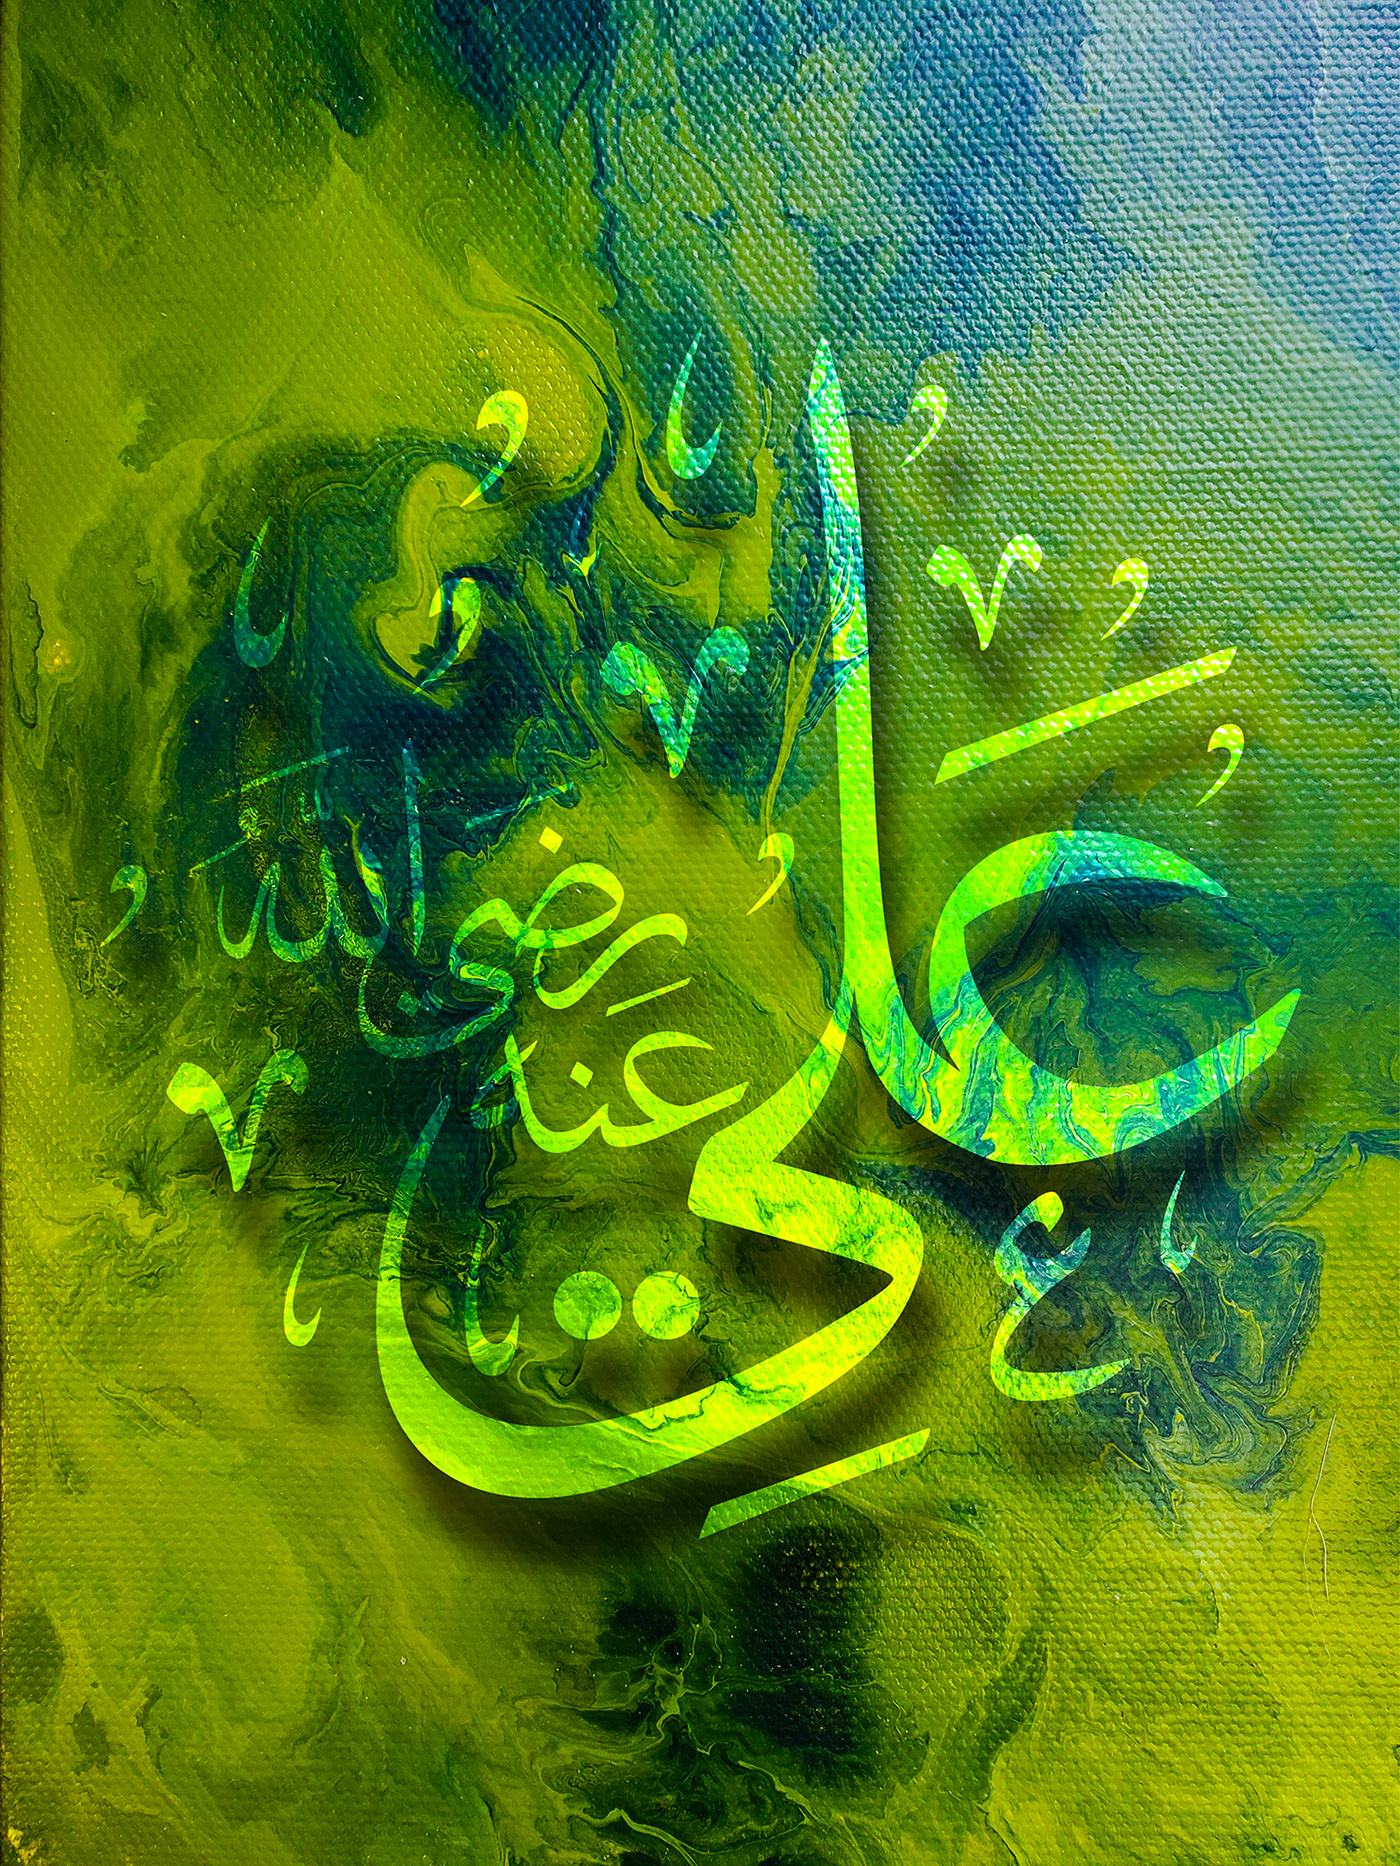 arabic islamic islamic islamic caligraphy